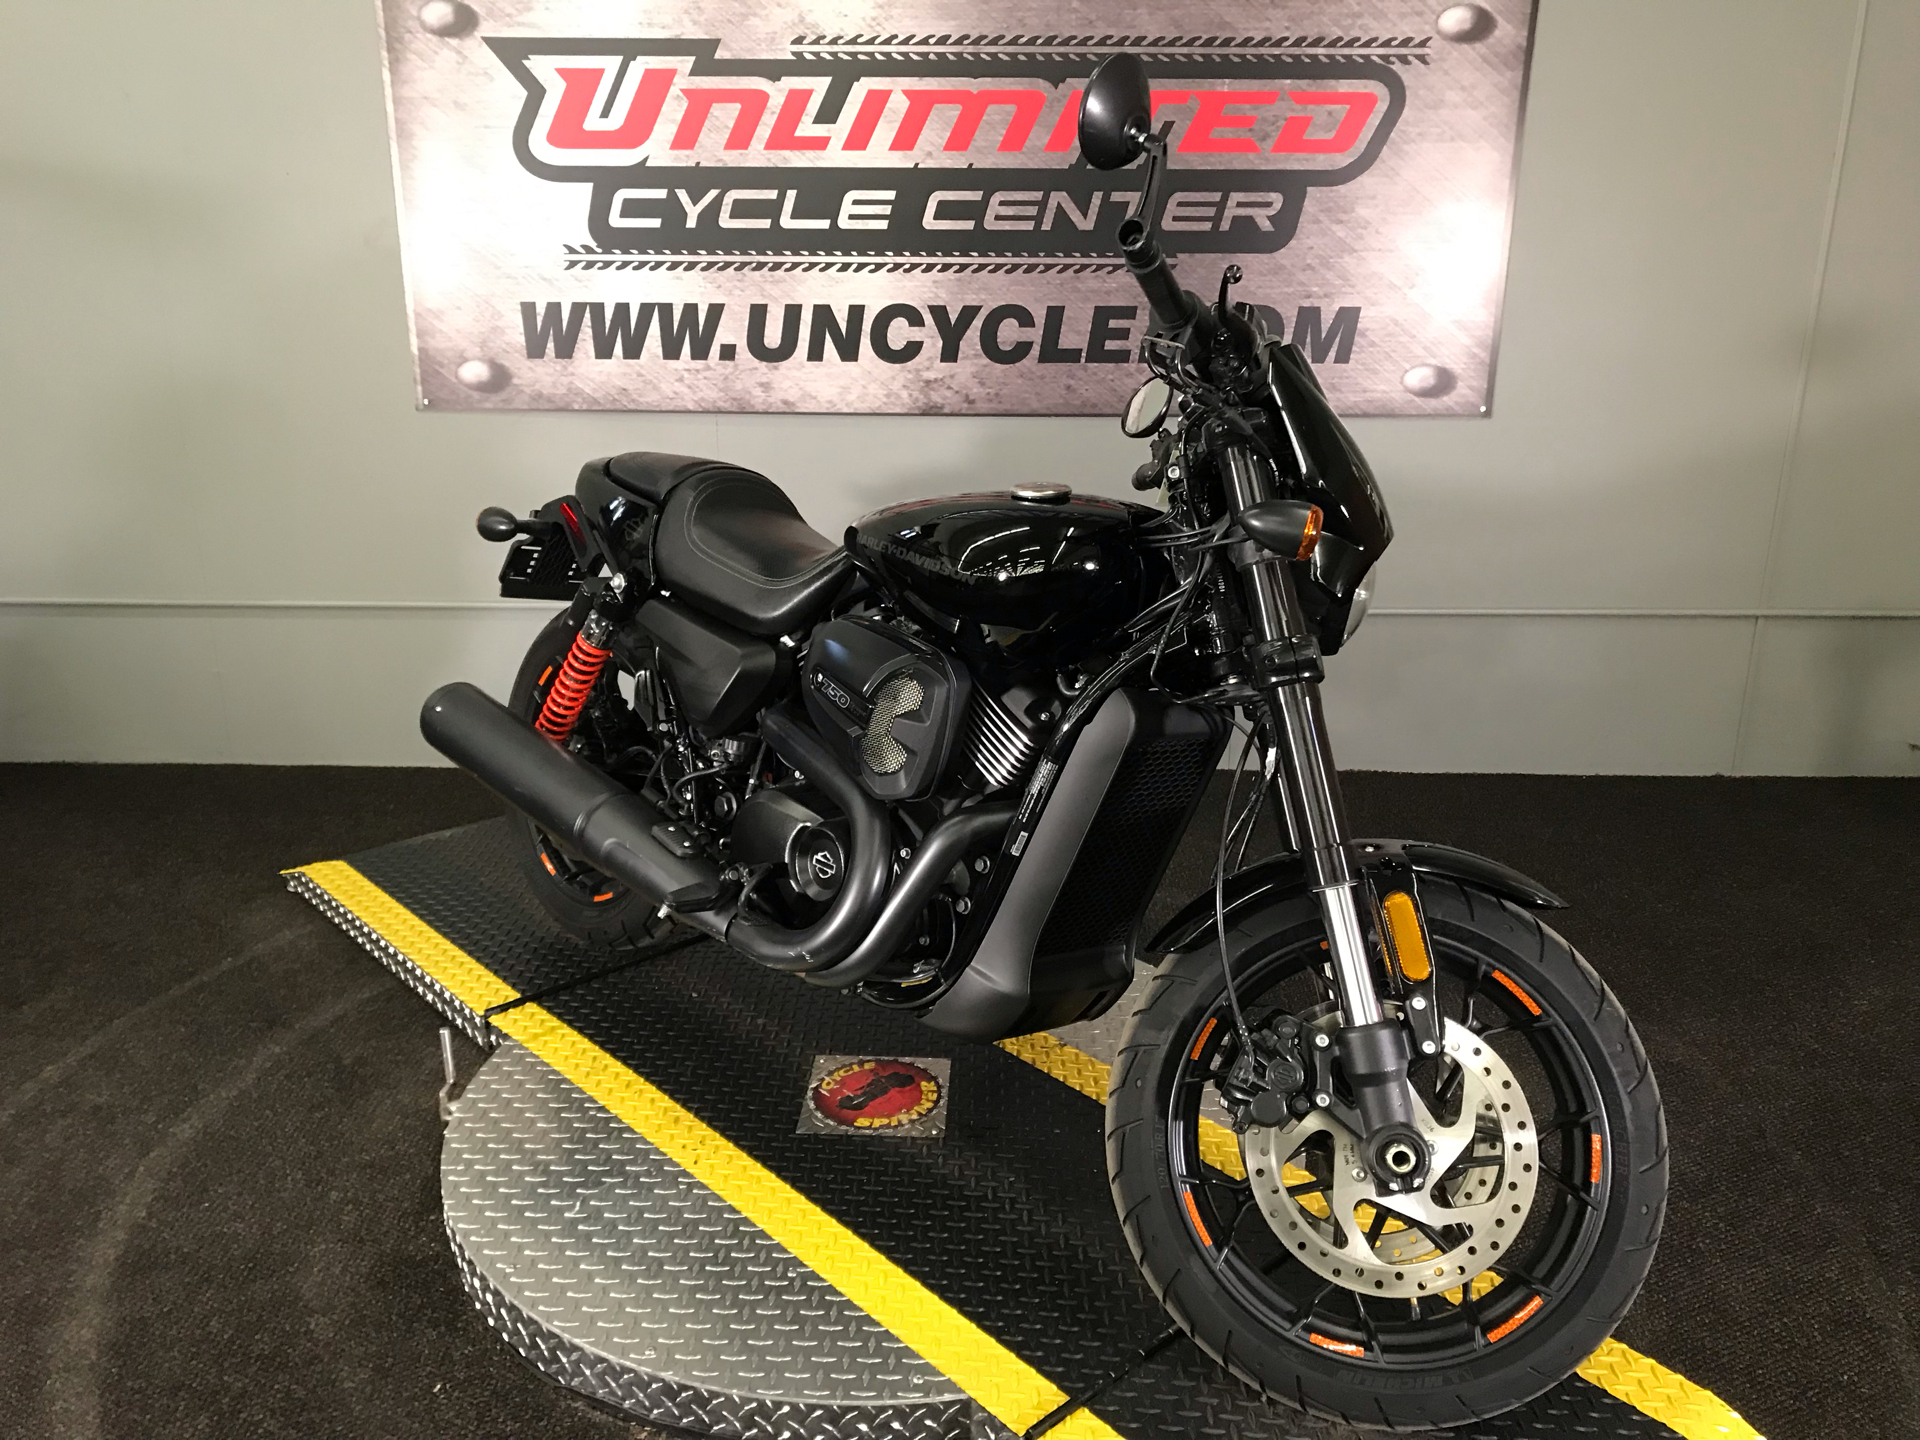 2017 Harley-Davidson Street Rod® in Tyrone, Pennsylvania - Photo 1